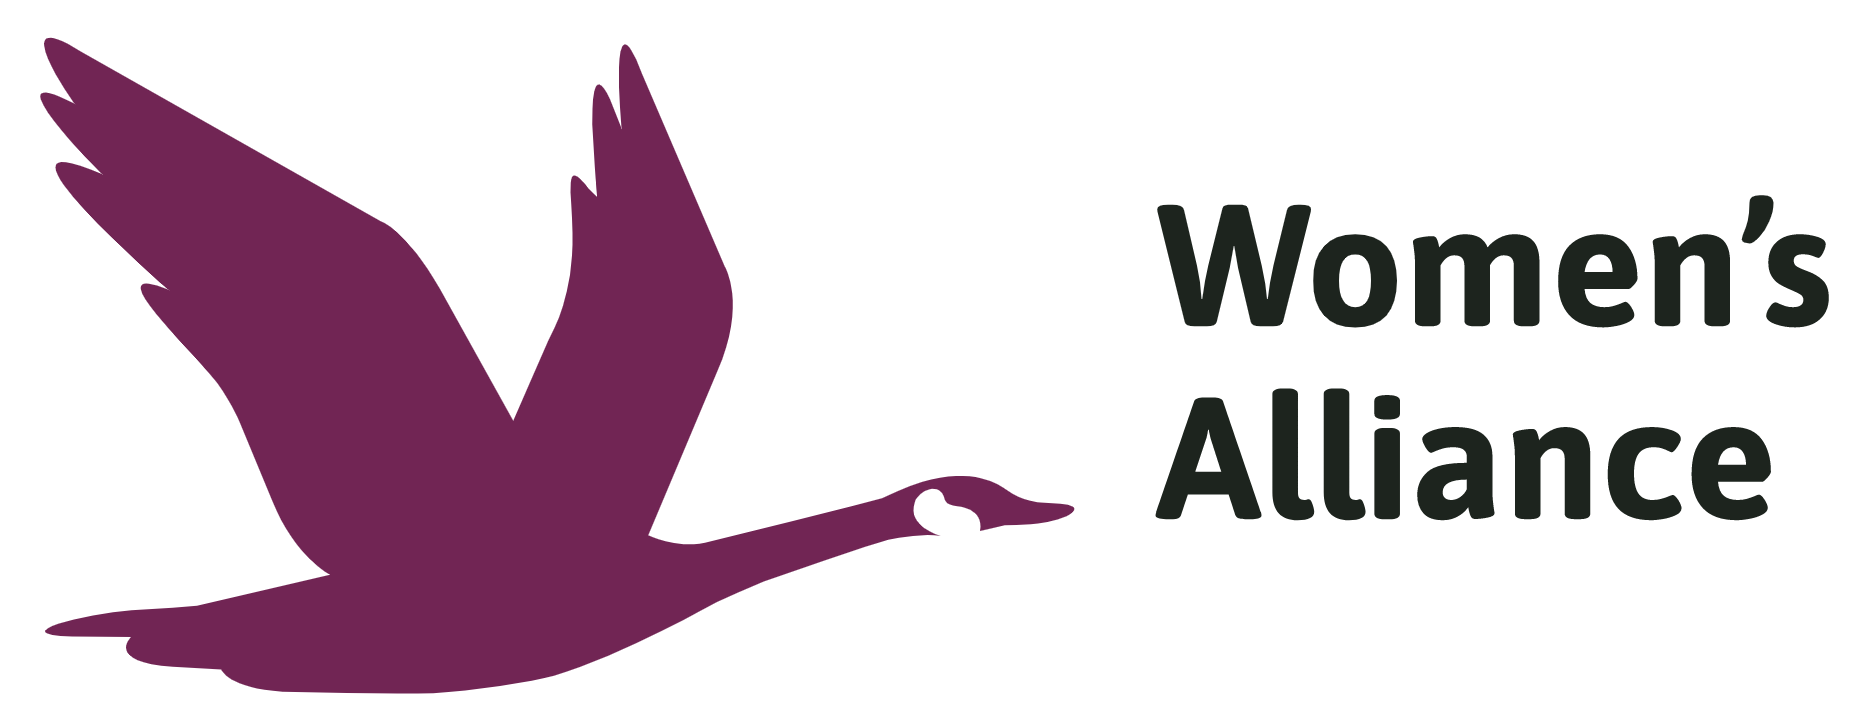 Wawa Women's Alliance